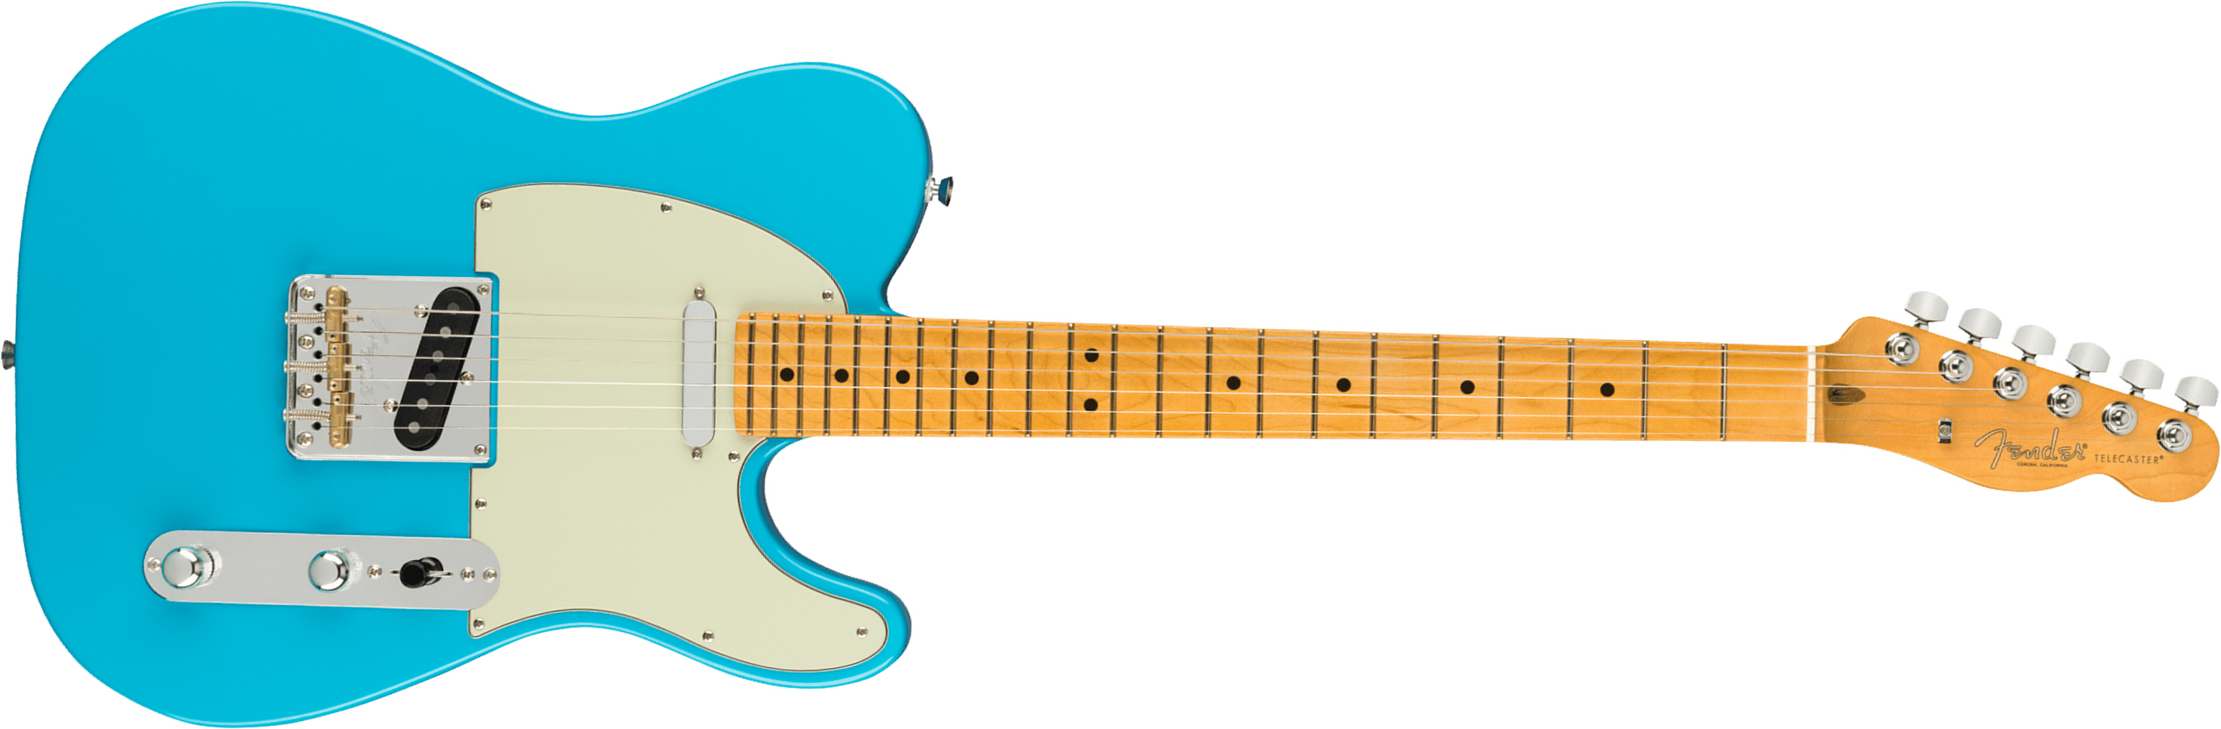 Fender Tele American Professional Ii Usa Mn - Miami Blue - Televorm elektrische gitaar - Main picture